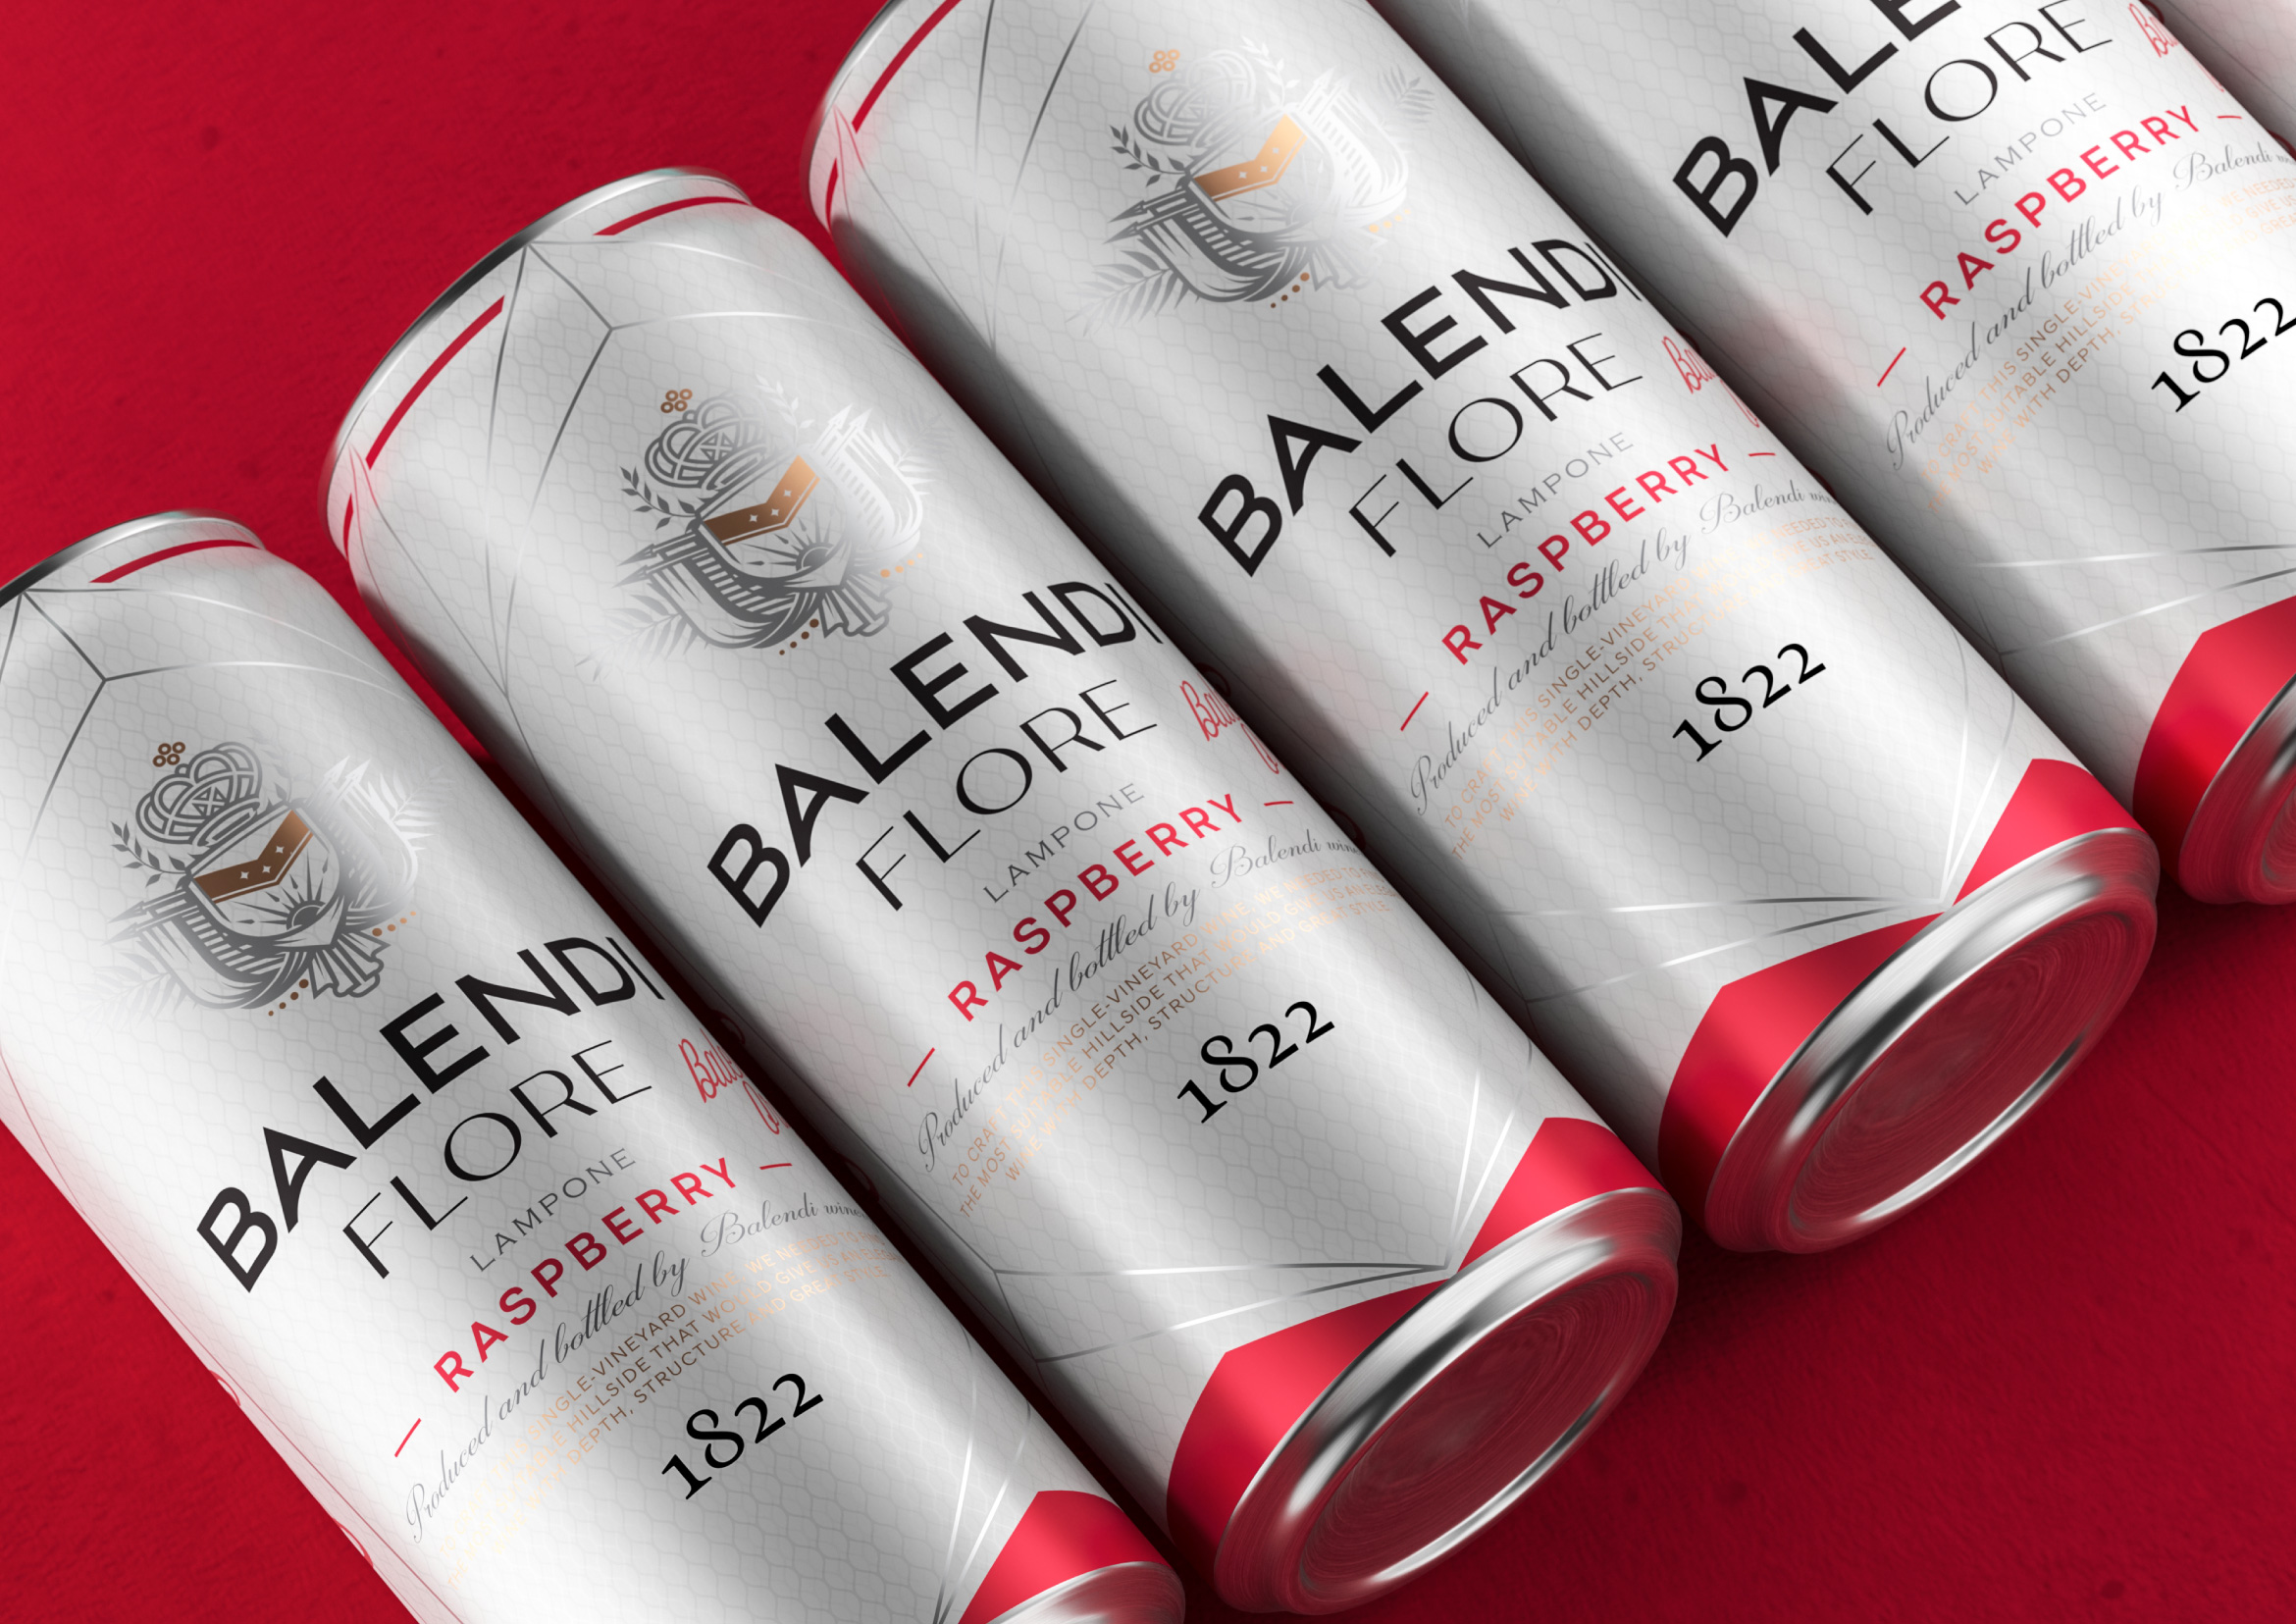 Reynolds and Reyner Creates Brand Identity and Packaging Design for Balendi Italian Brand of Light Sparkling Wine